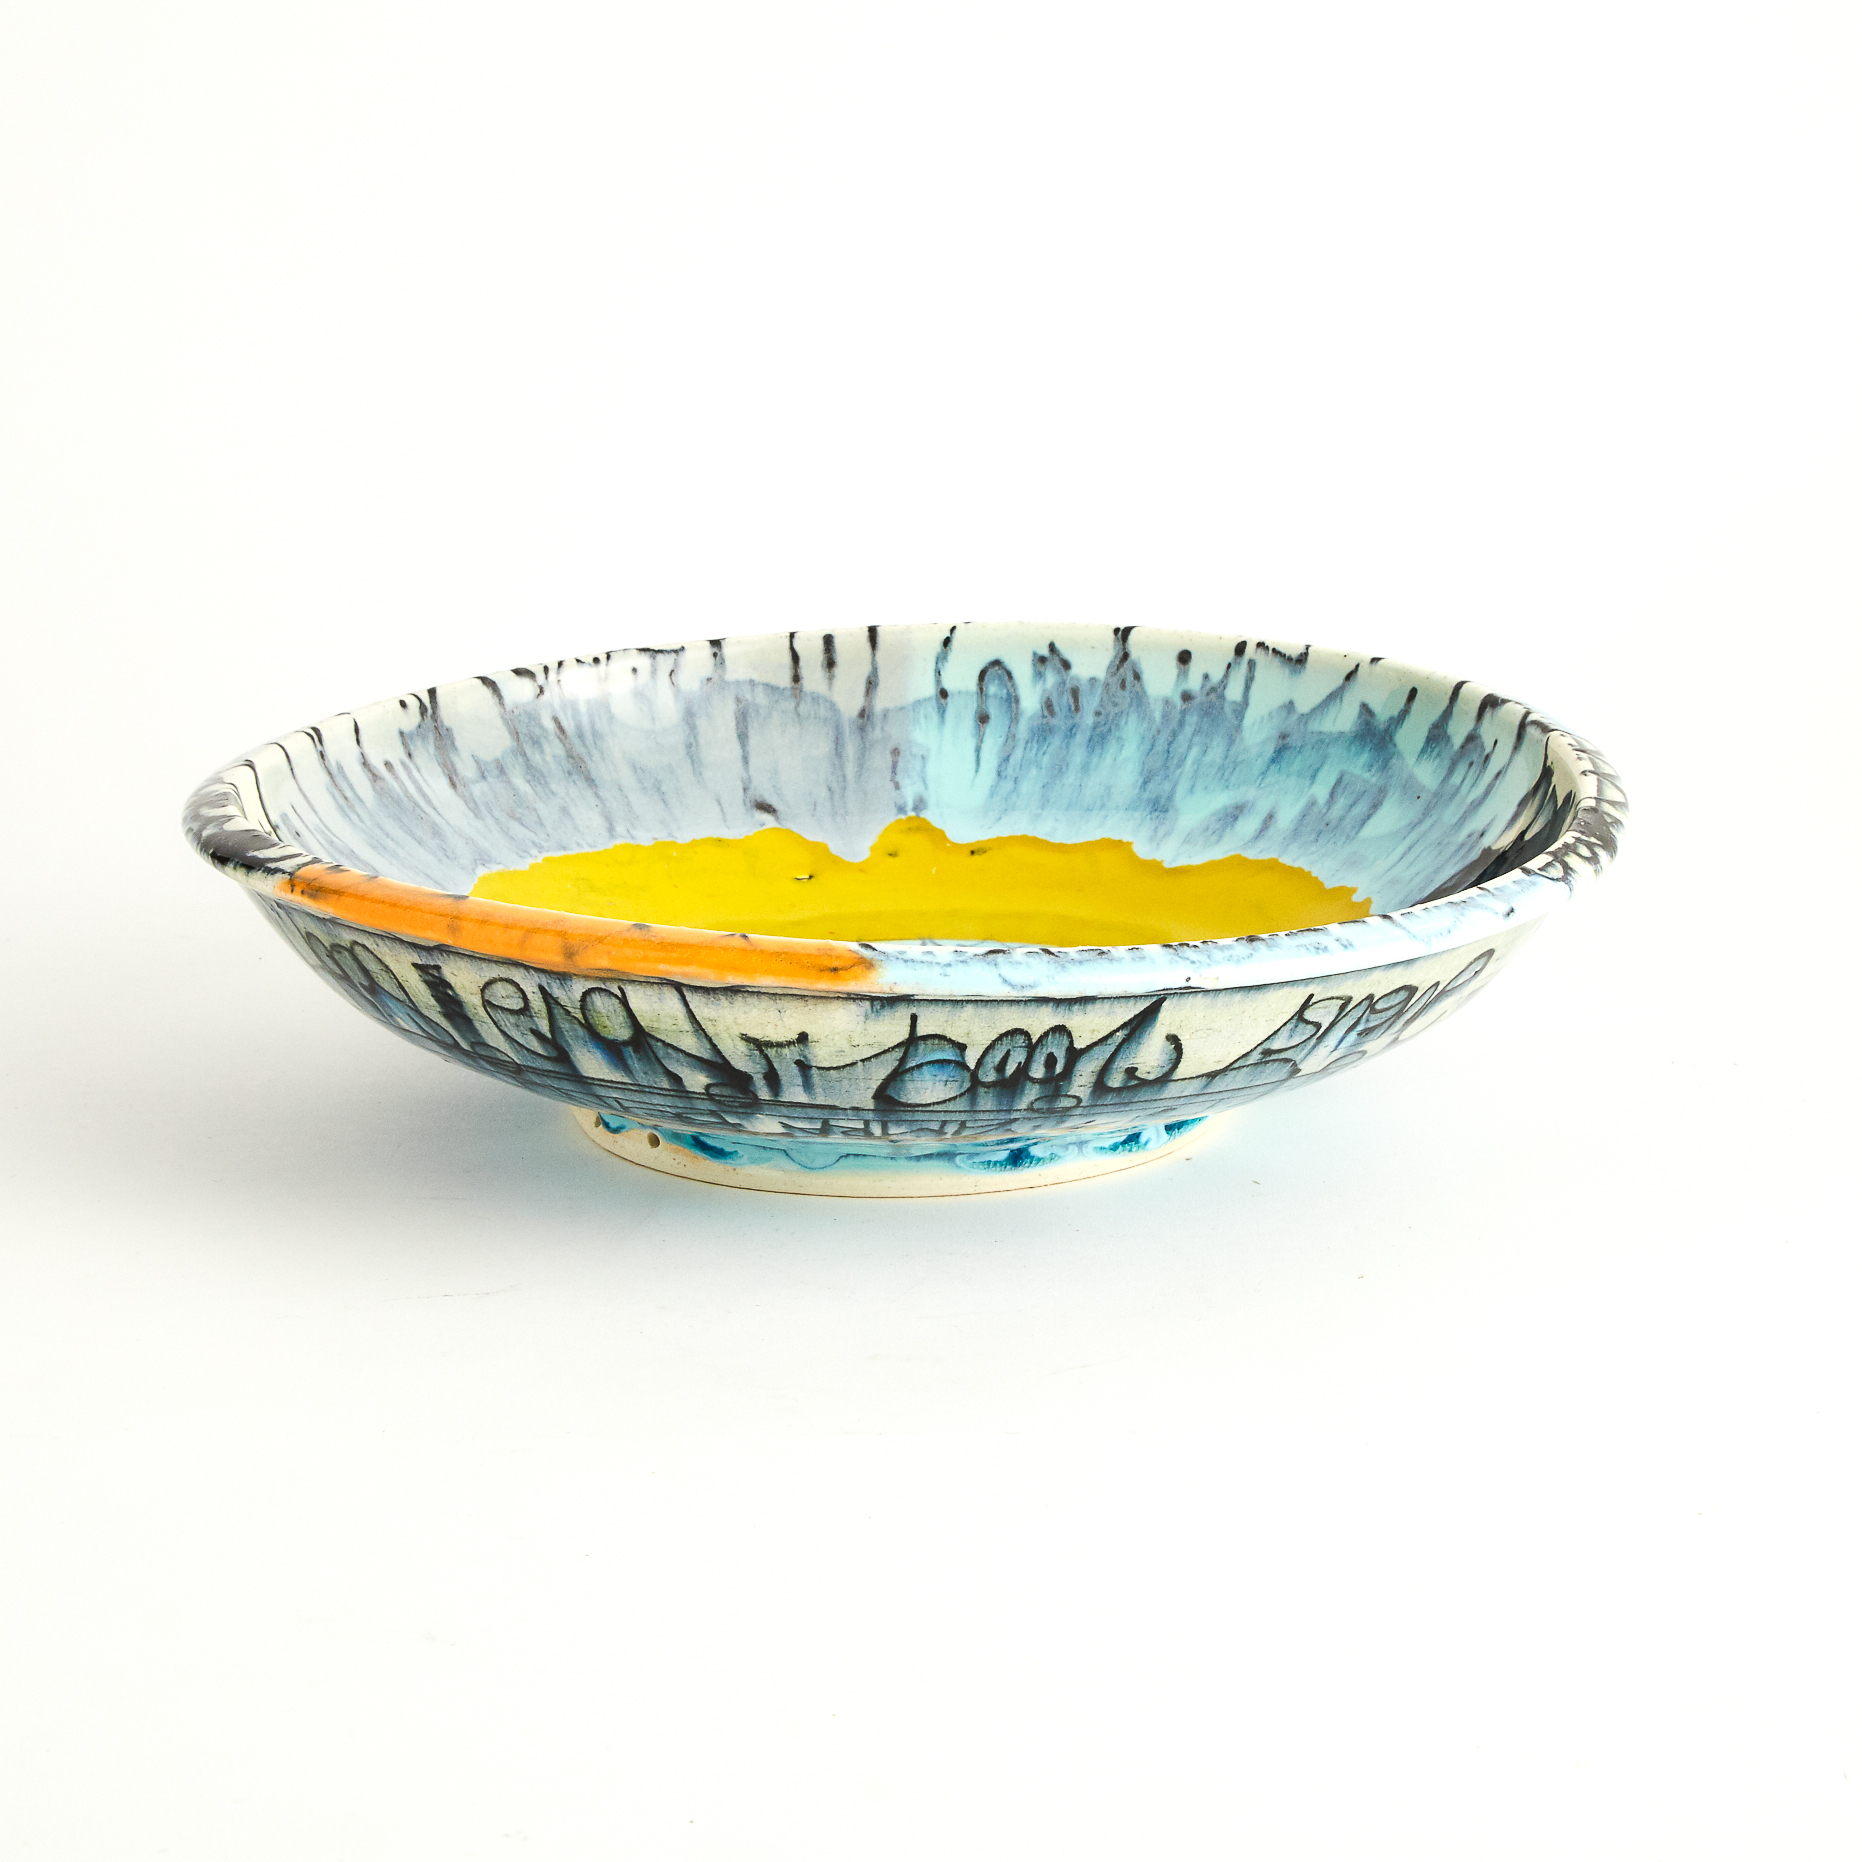 Zimra Beiner (Canadian, b.1985), Glazed Stoneware Bowl, 2009